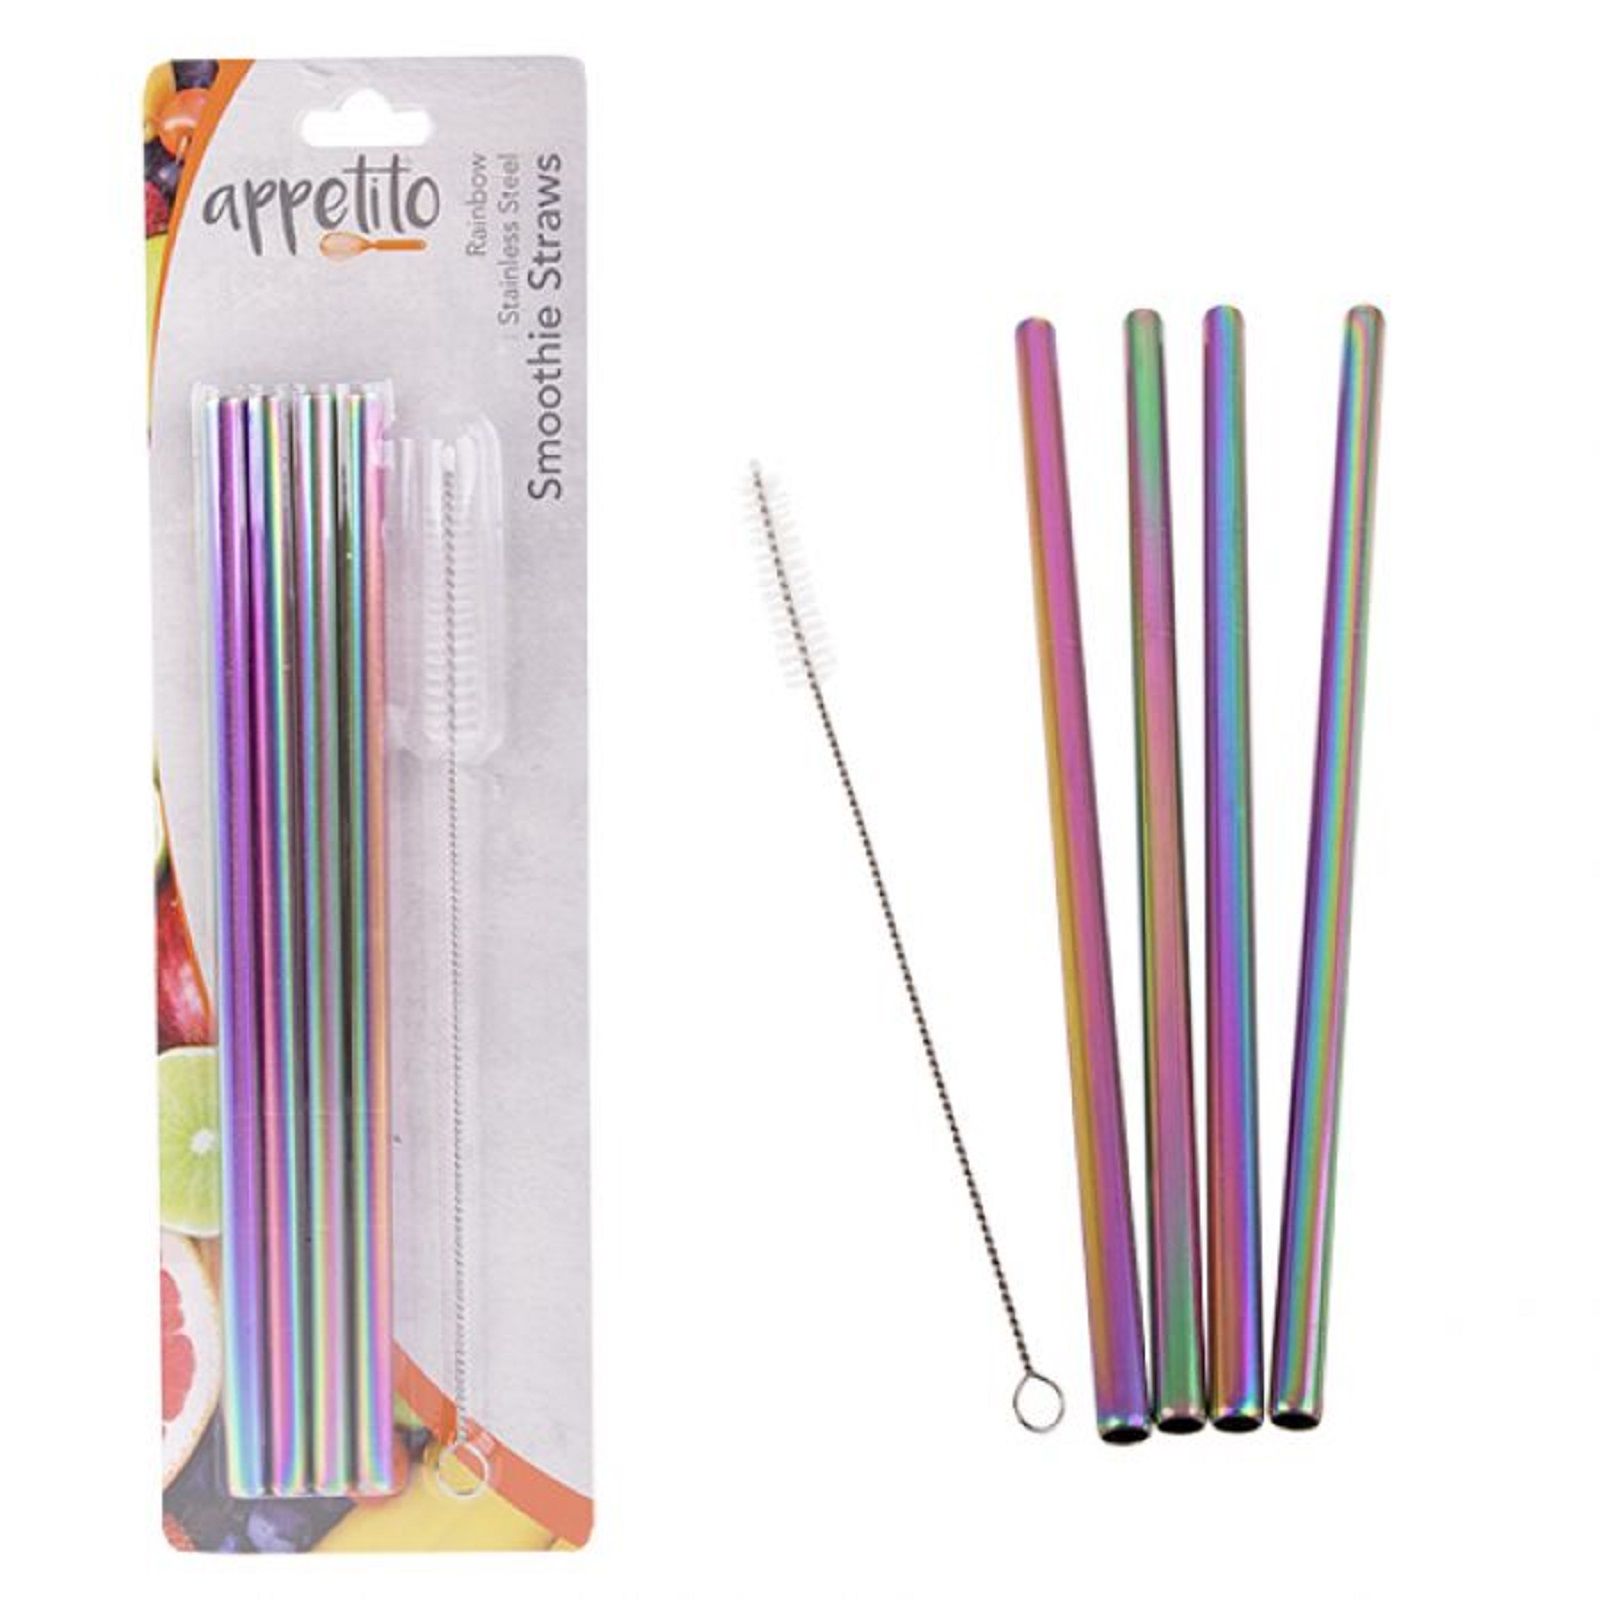 Appetito Set 4 METALLIC Rainbow Straight Stainless Steel Straws + Cleaning Brush